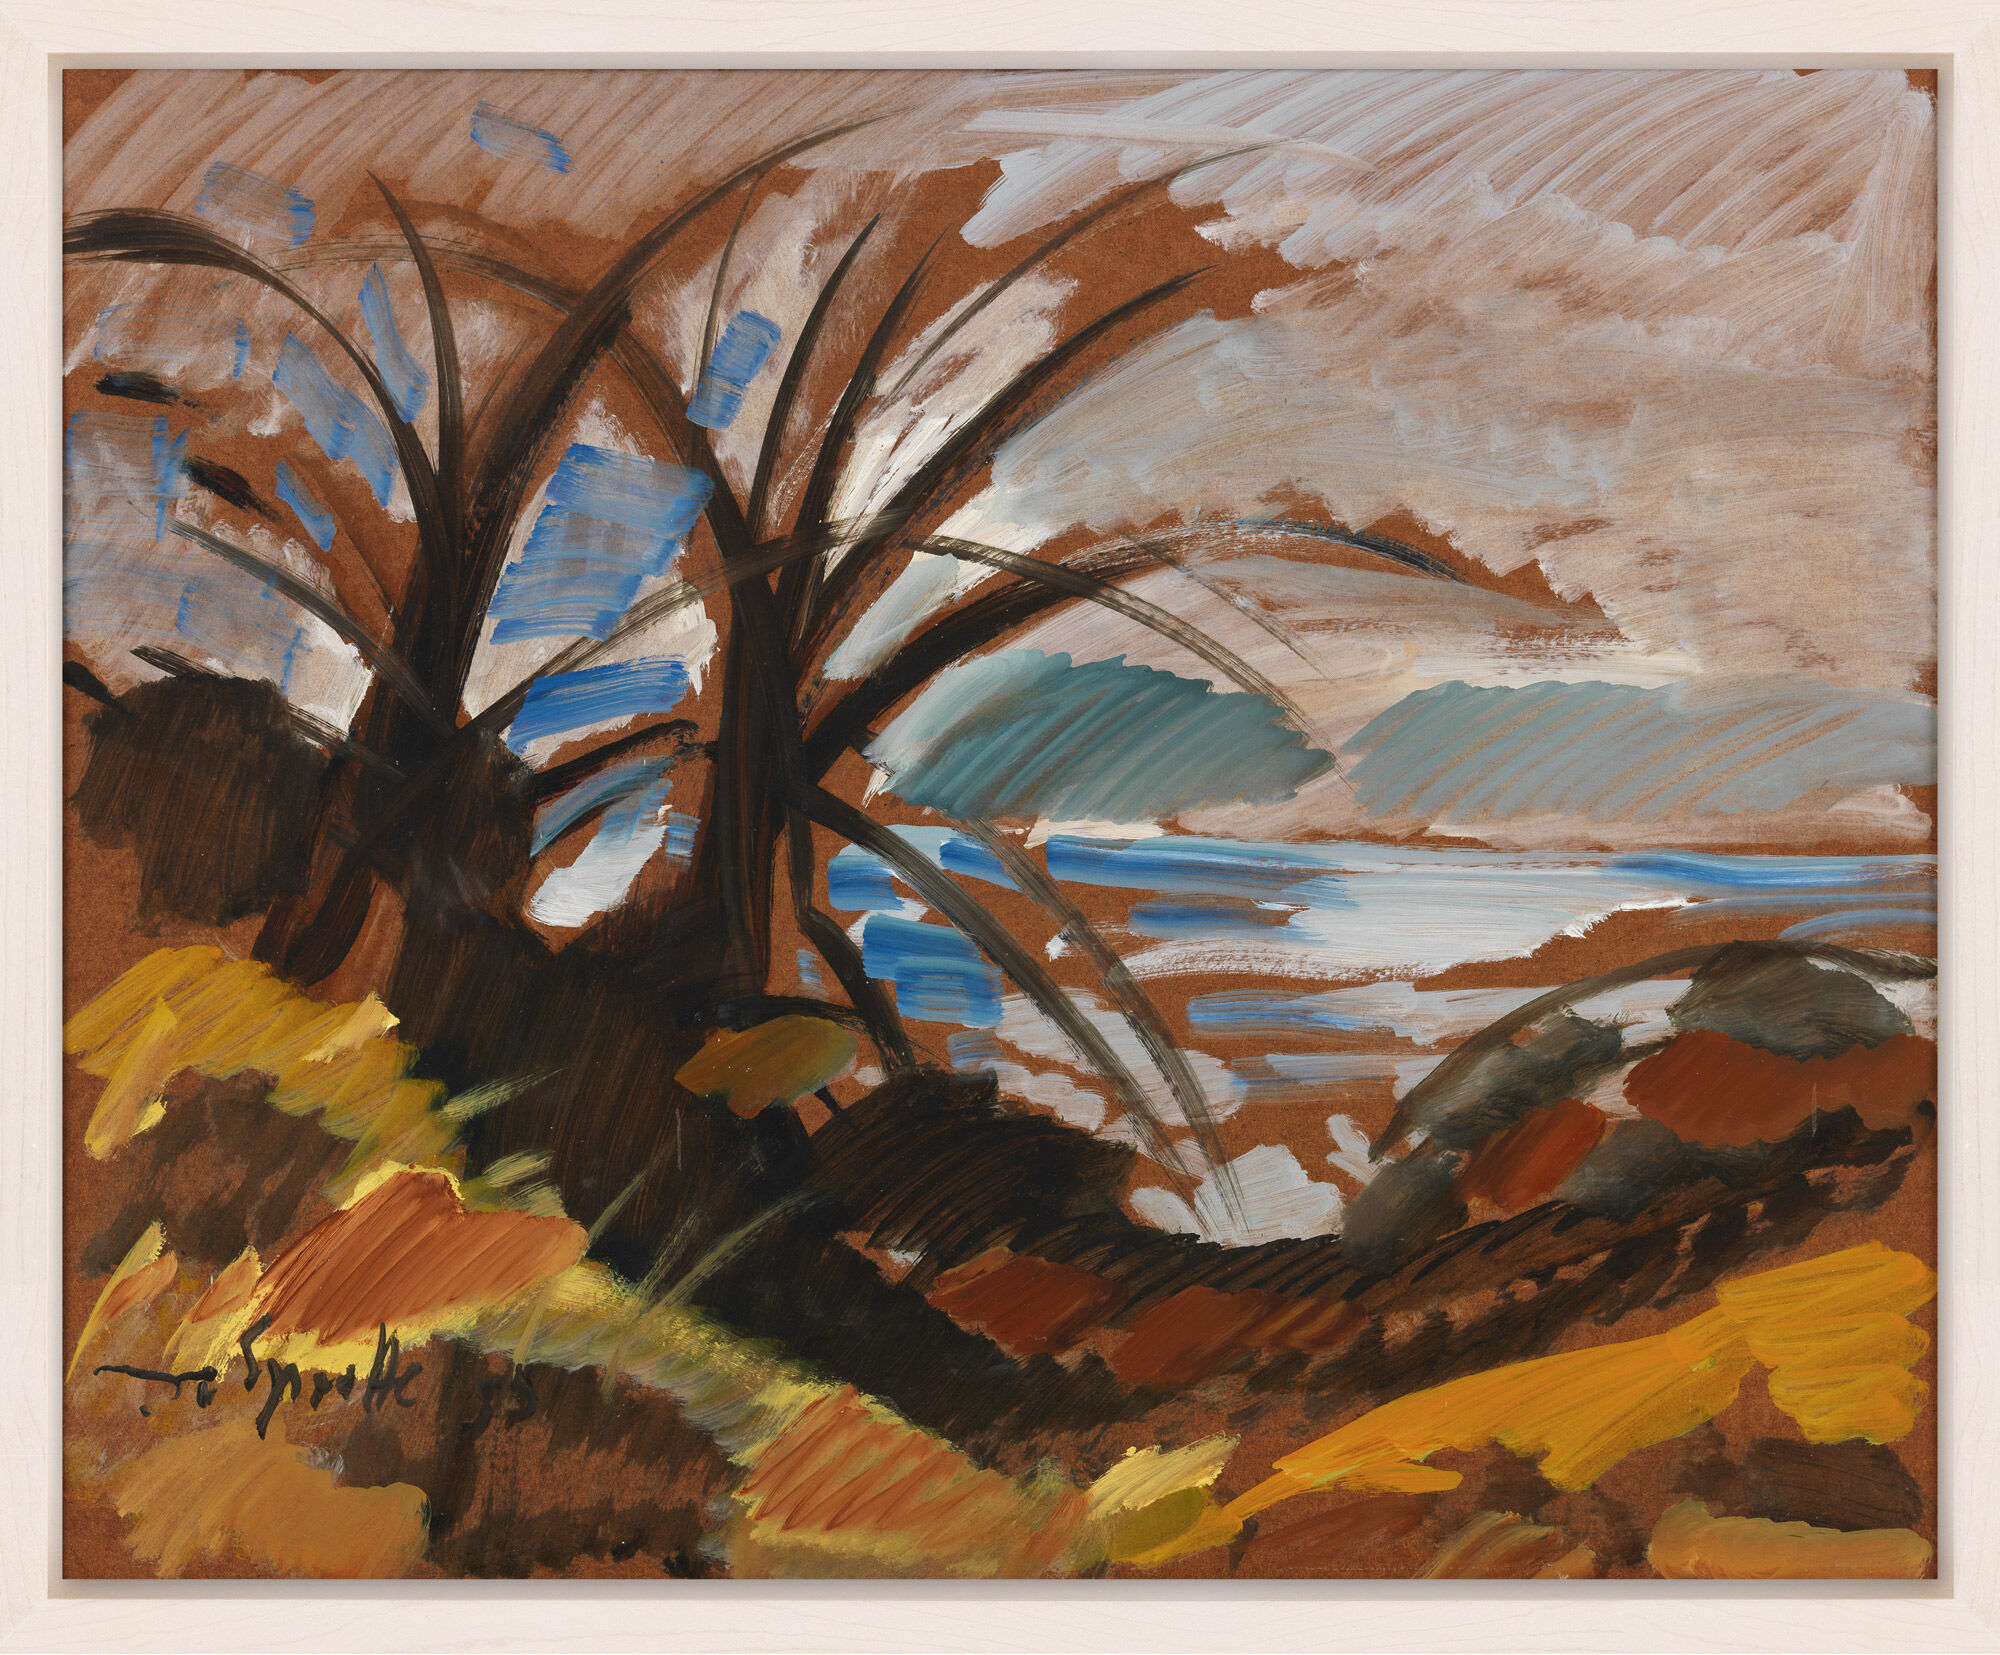 Picture "Landscape with Sea (Brown)" (1991) (Unique piece) by Siegward Sprotte